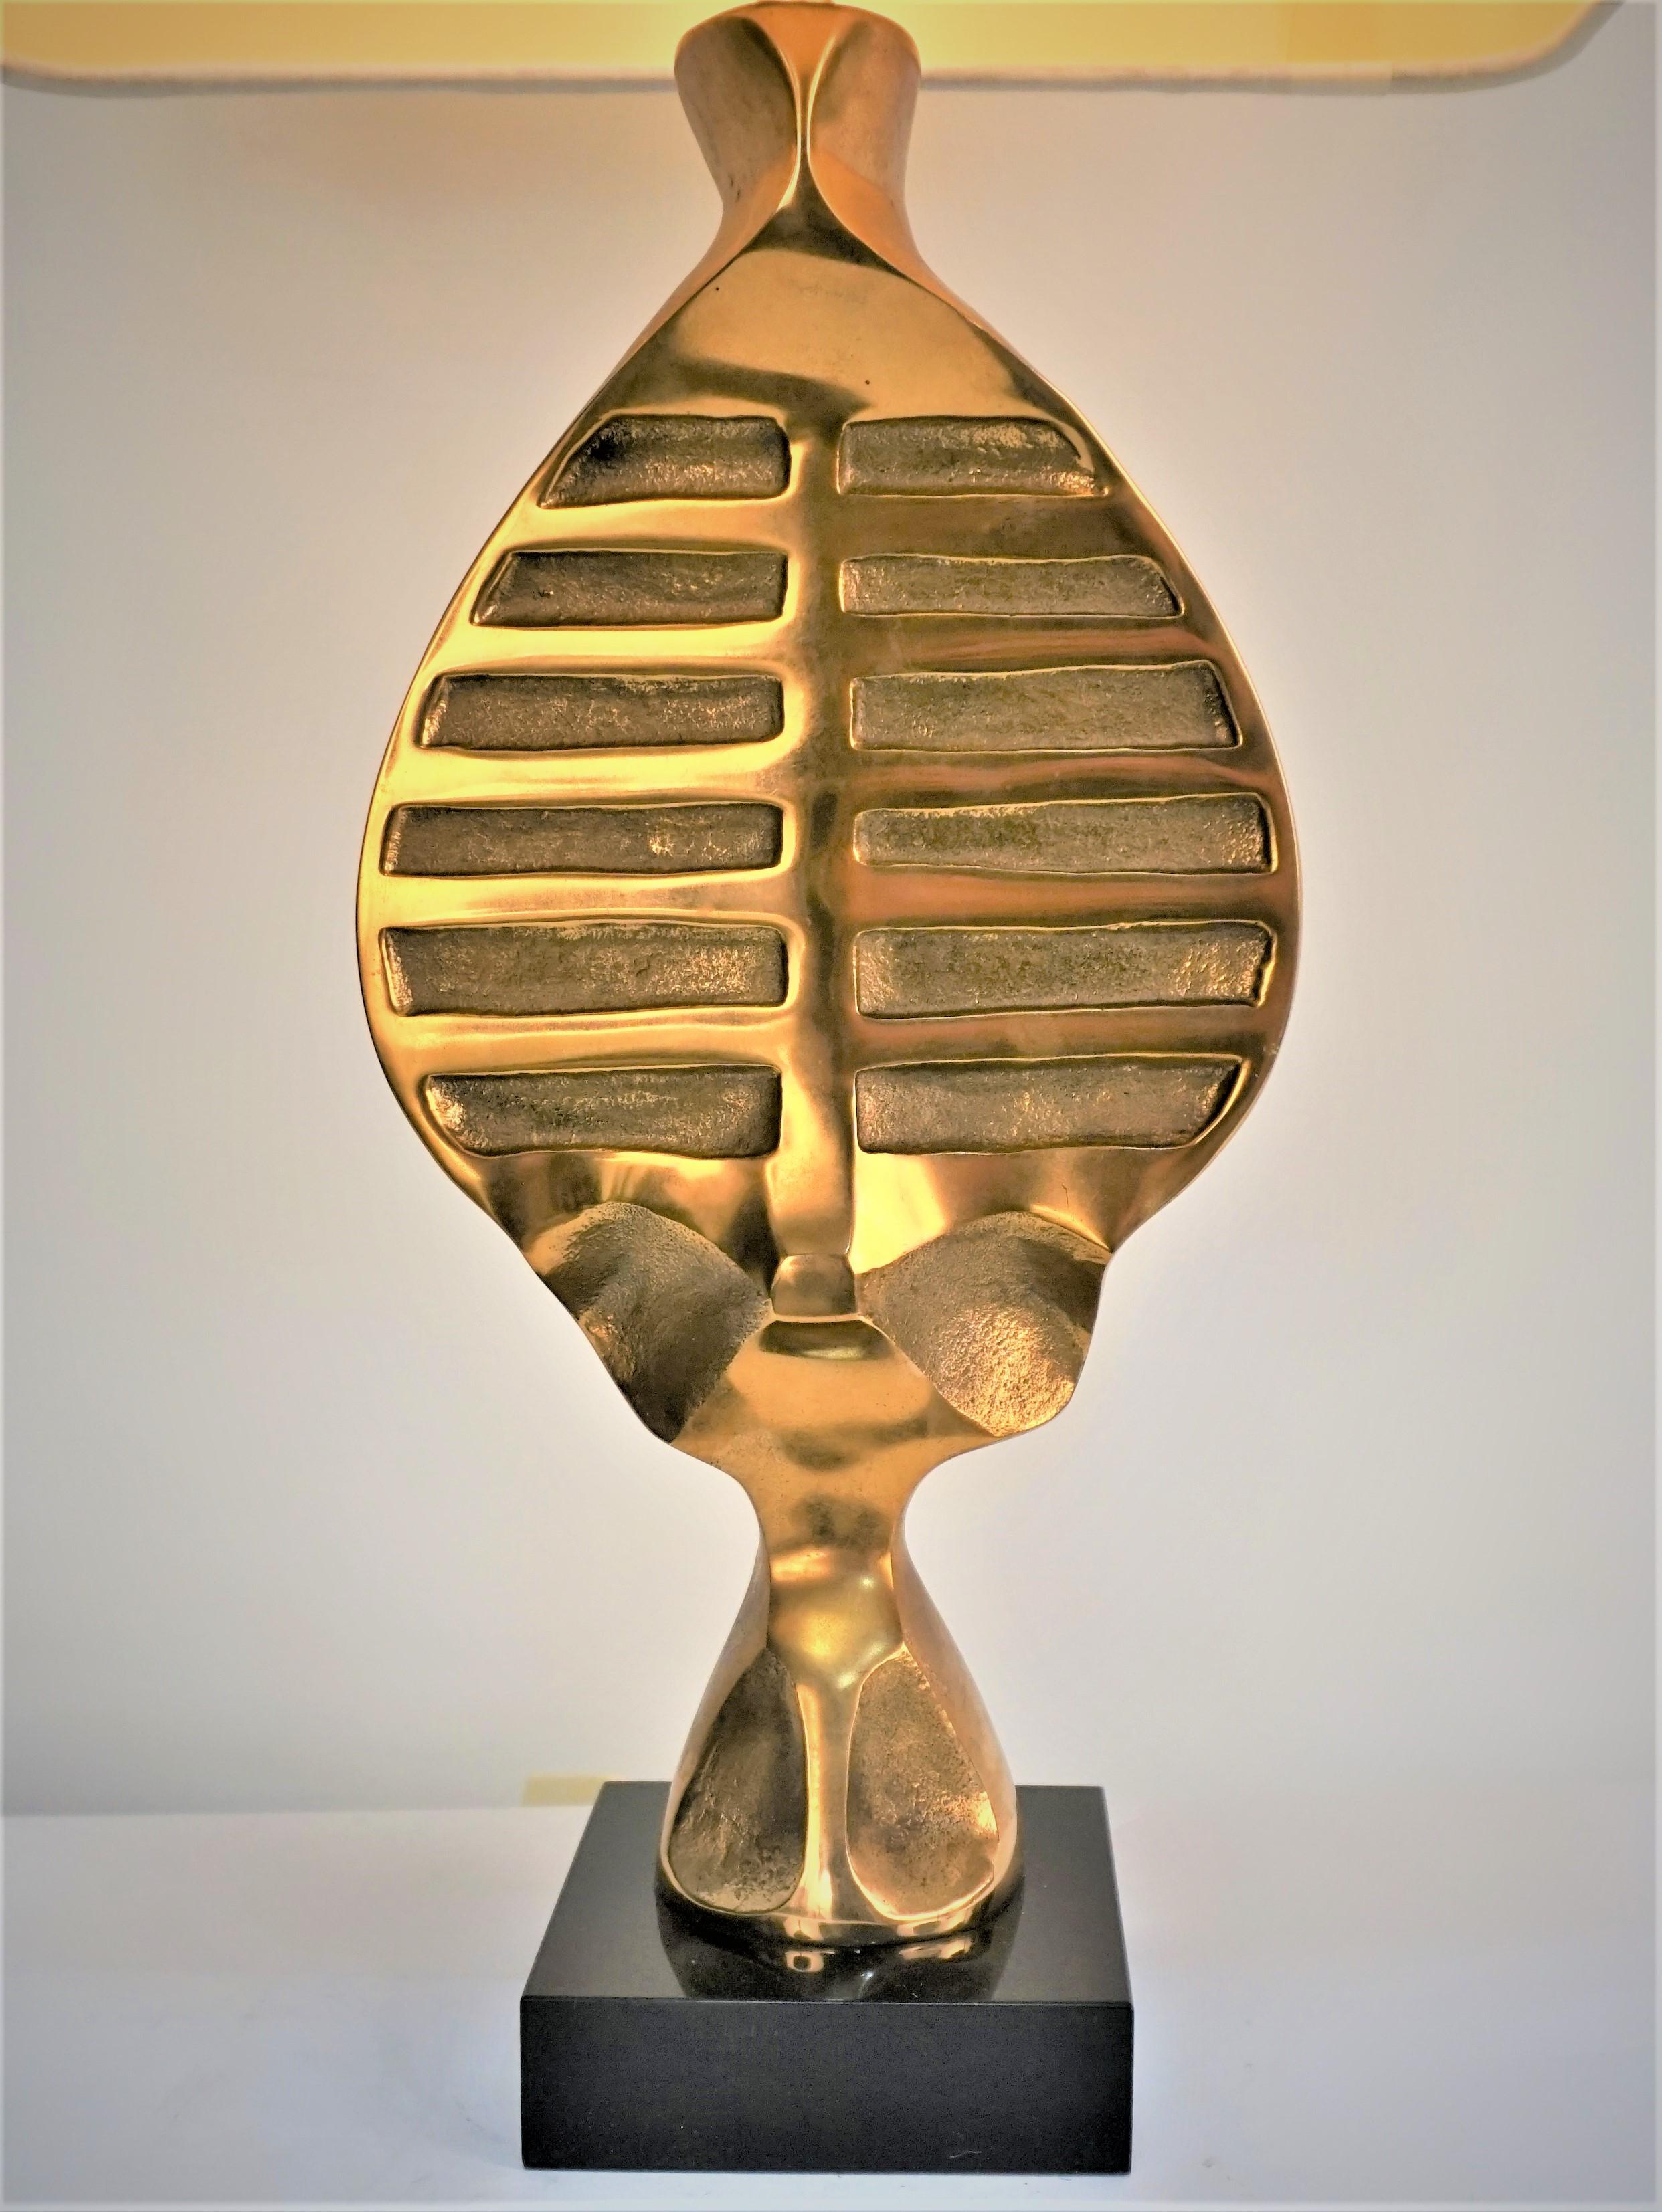 Modern bronze Lucite sculpture table lamp by Michel Jaubert.
Professionally rewired, silk on hardback lampshade.